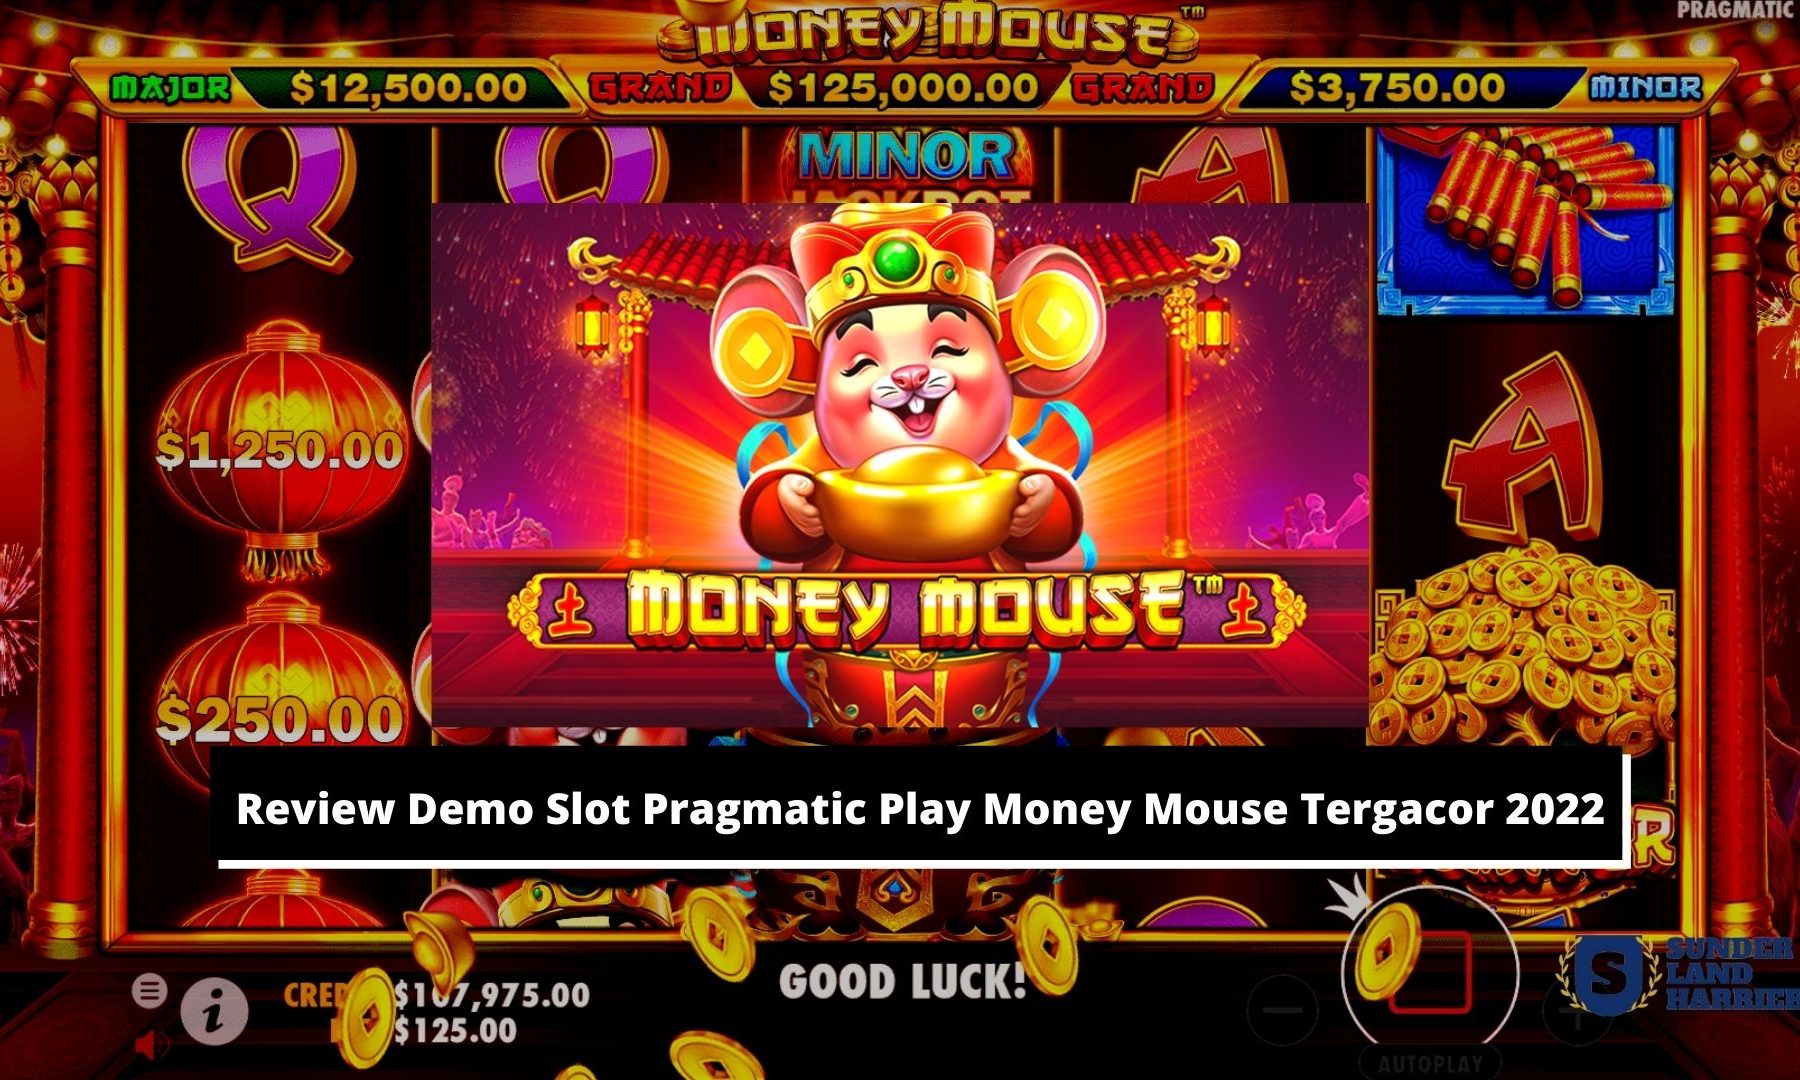 Review Demo Slot Pragmatic Play Money Mouse Tergacor 2022